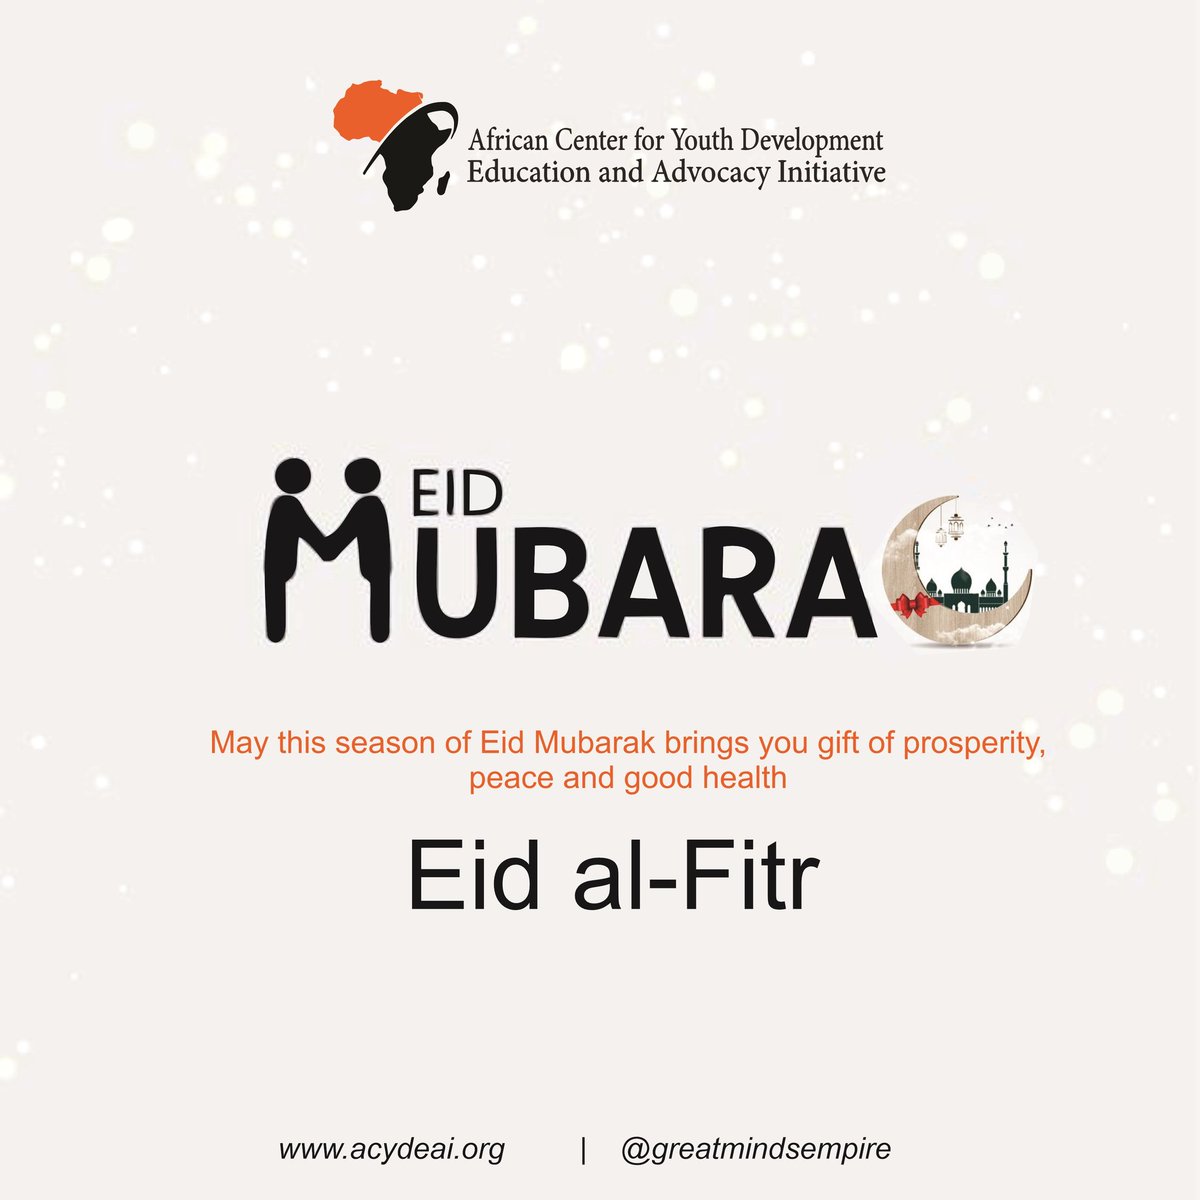 Happy Eid Al-fitr all